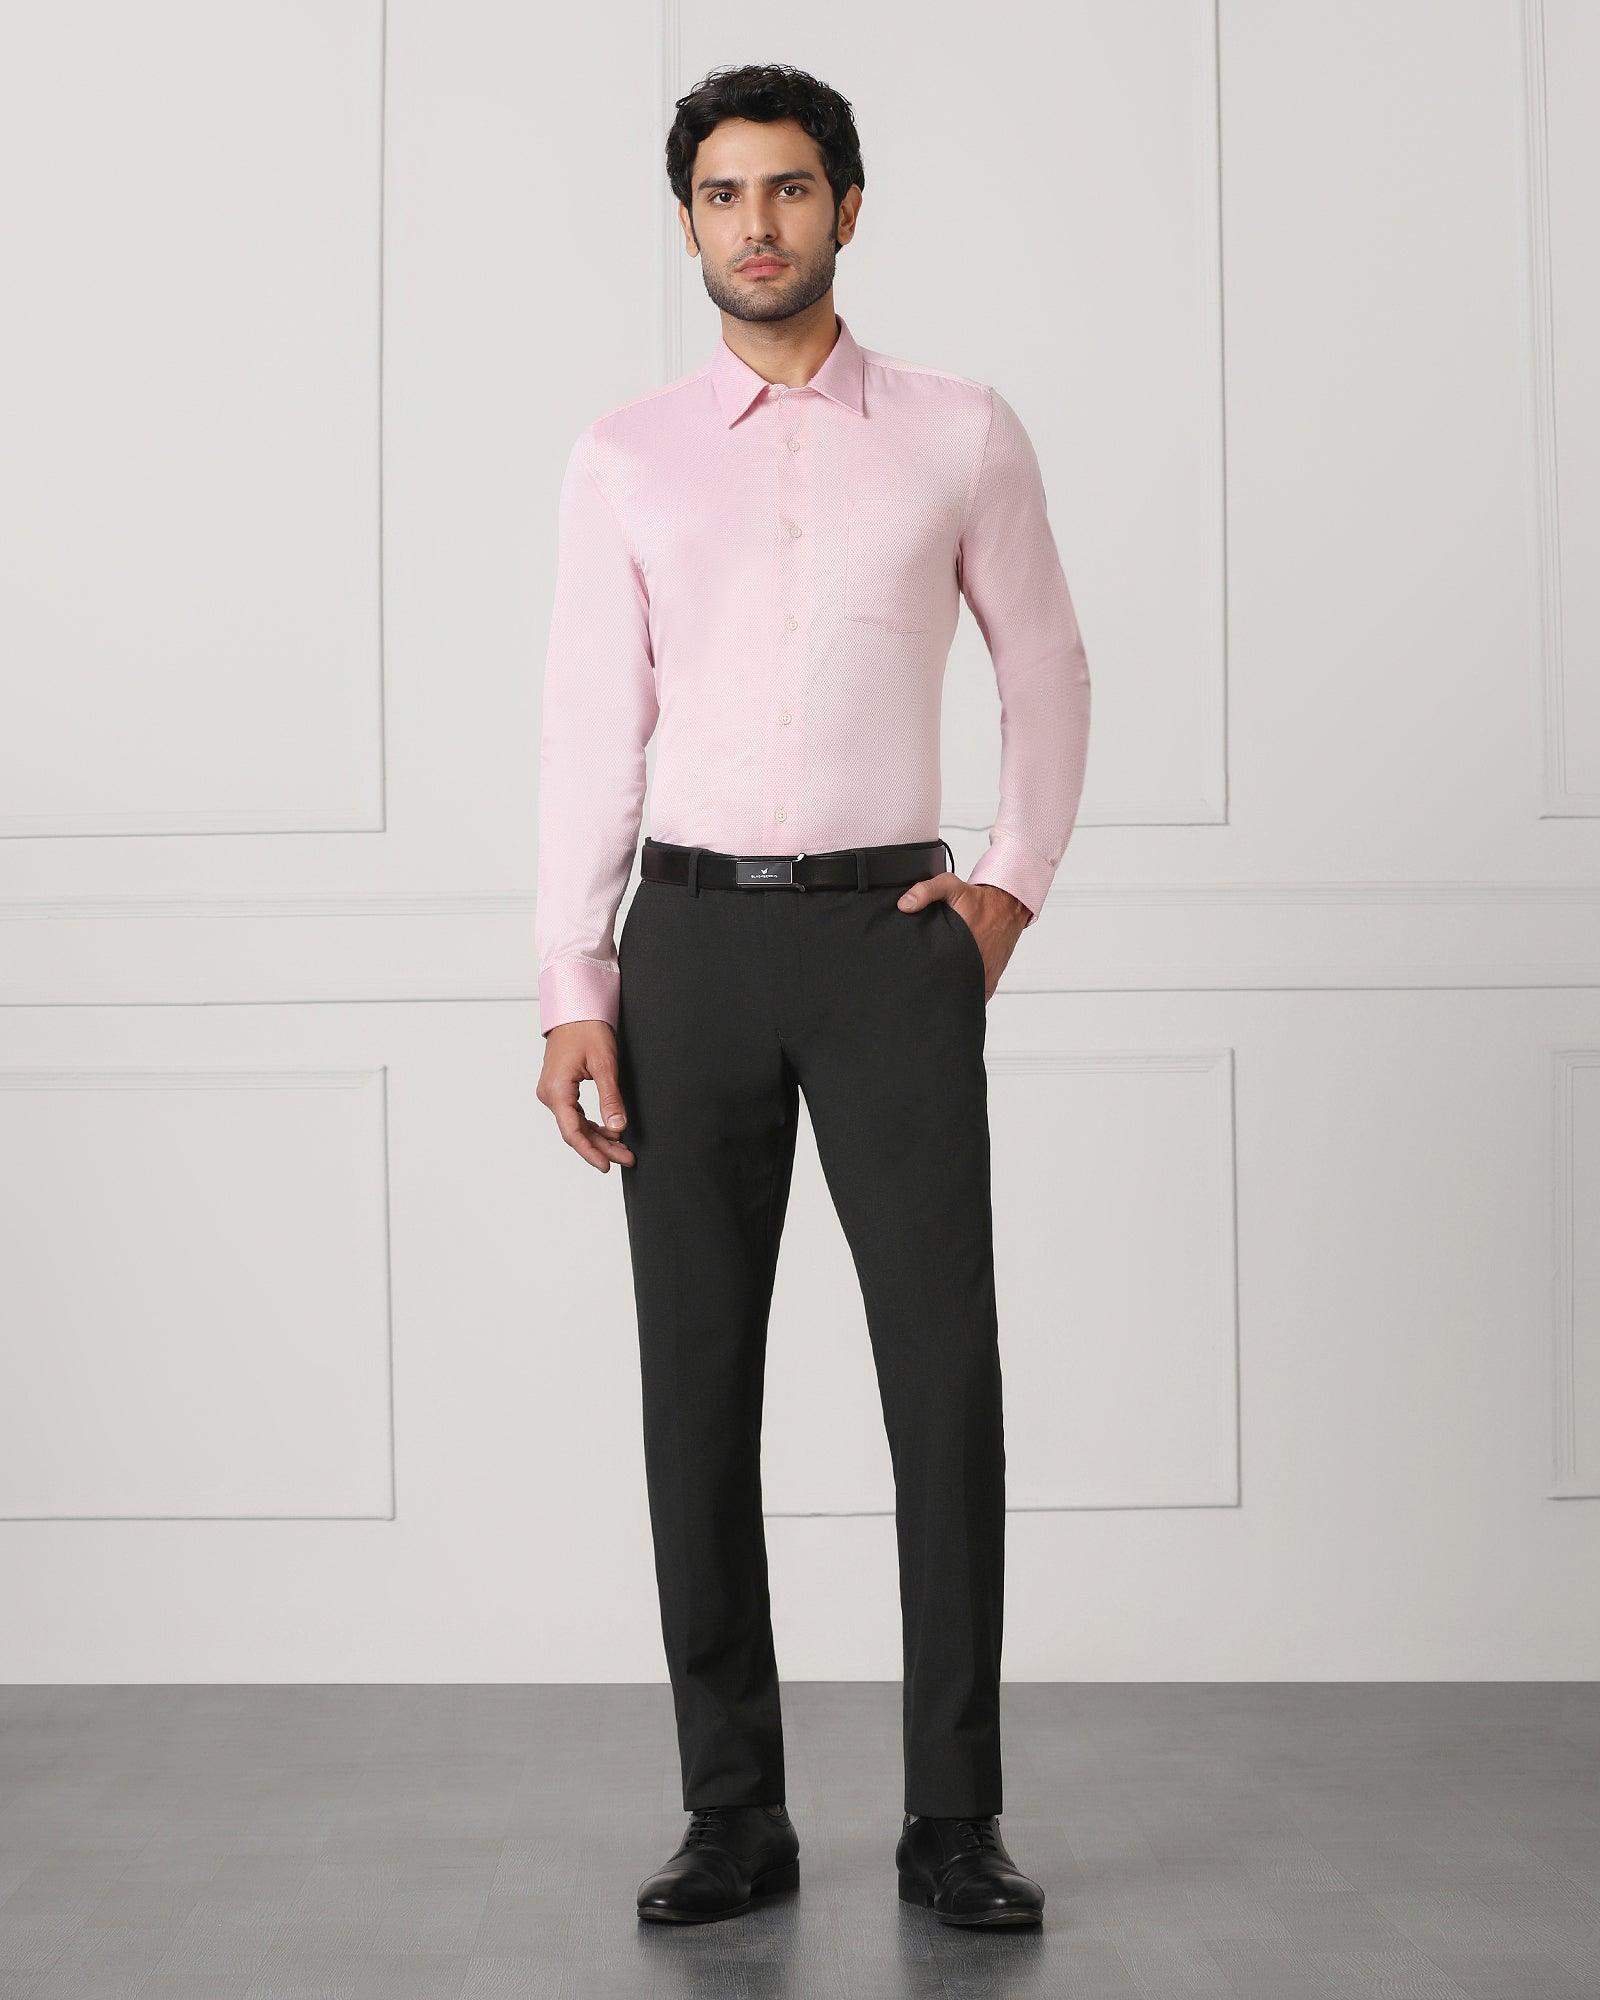 Men's Hot Pink Blazer, White Dress Shirt, Hot Pink Dress Pants, Black  Sunglasses | Lookastic